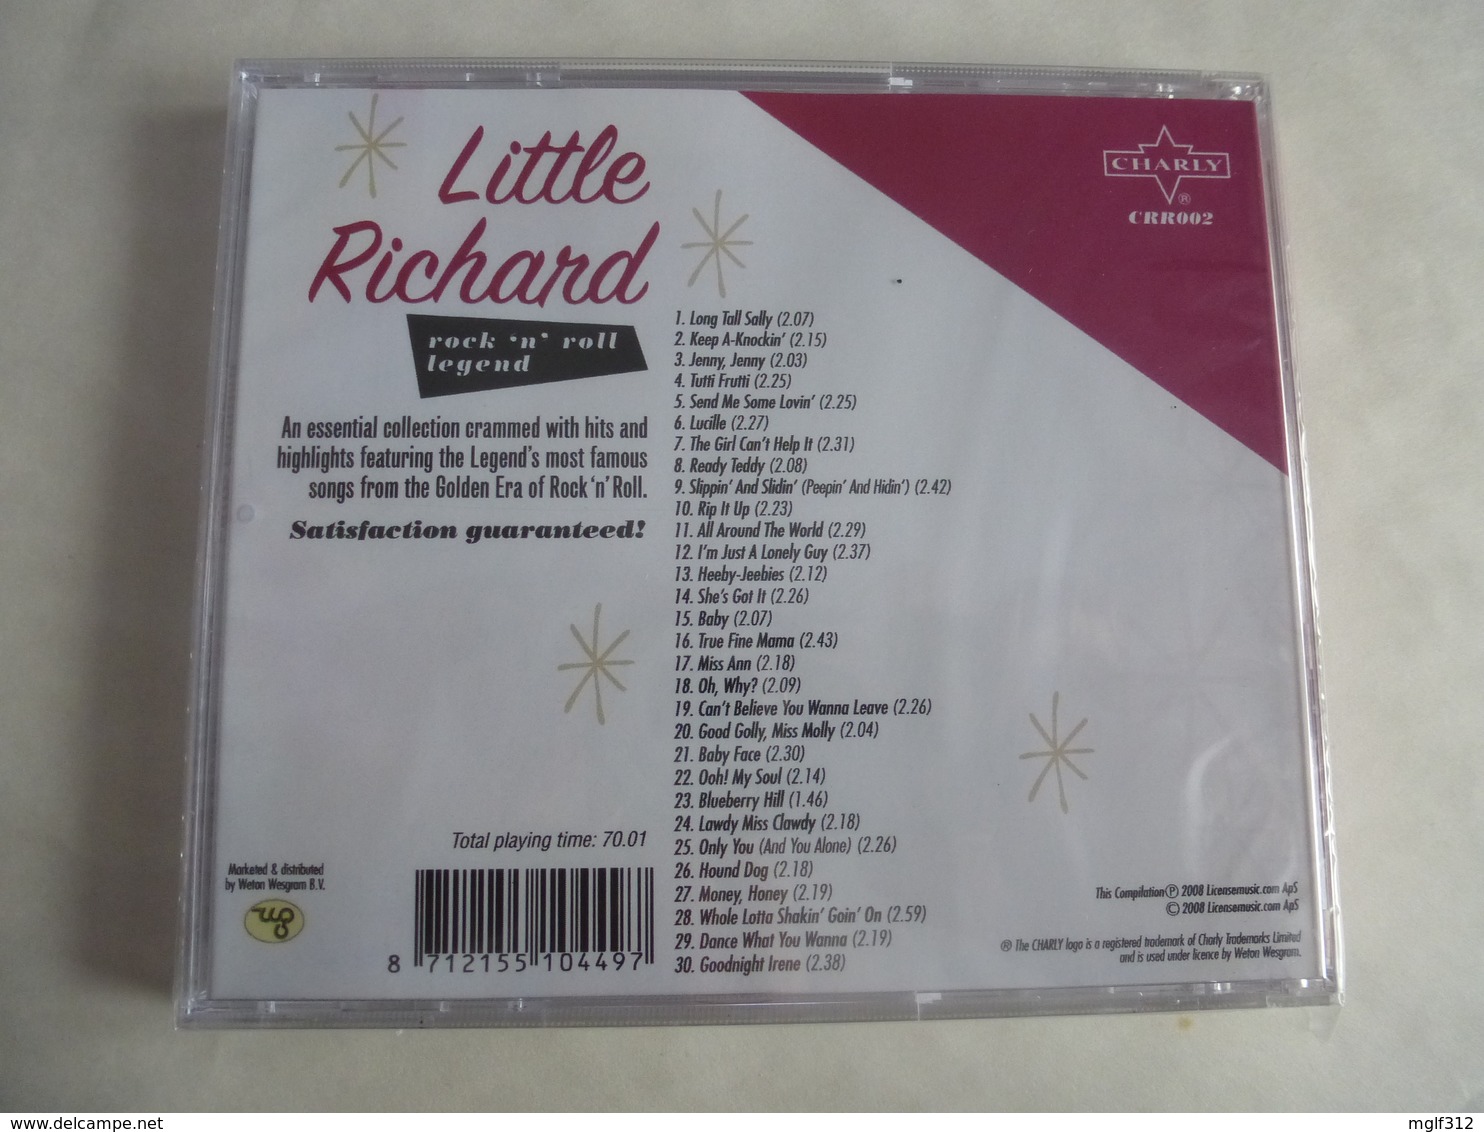 LITTLE RICHARD - Rock'n'Roll - CD 30 Titres - Edition CHARLY 2008 - Détails 2éme Scan - Collectors